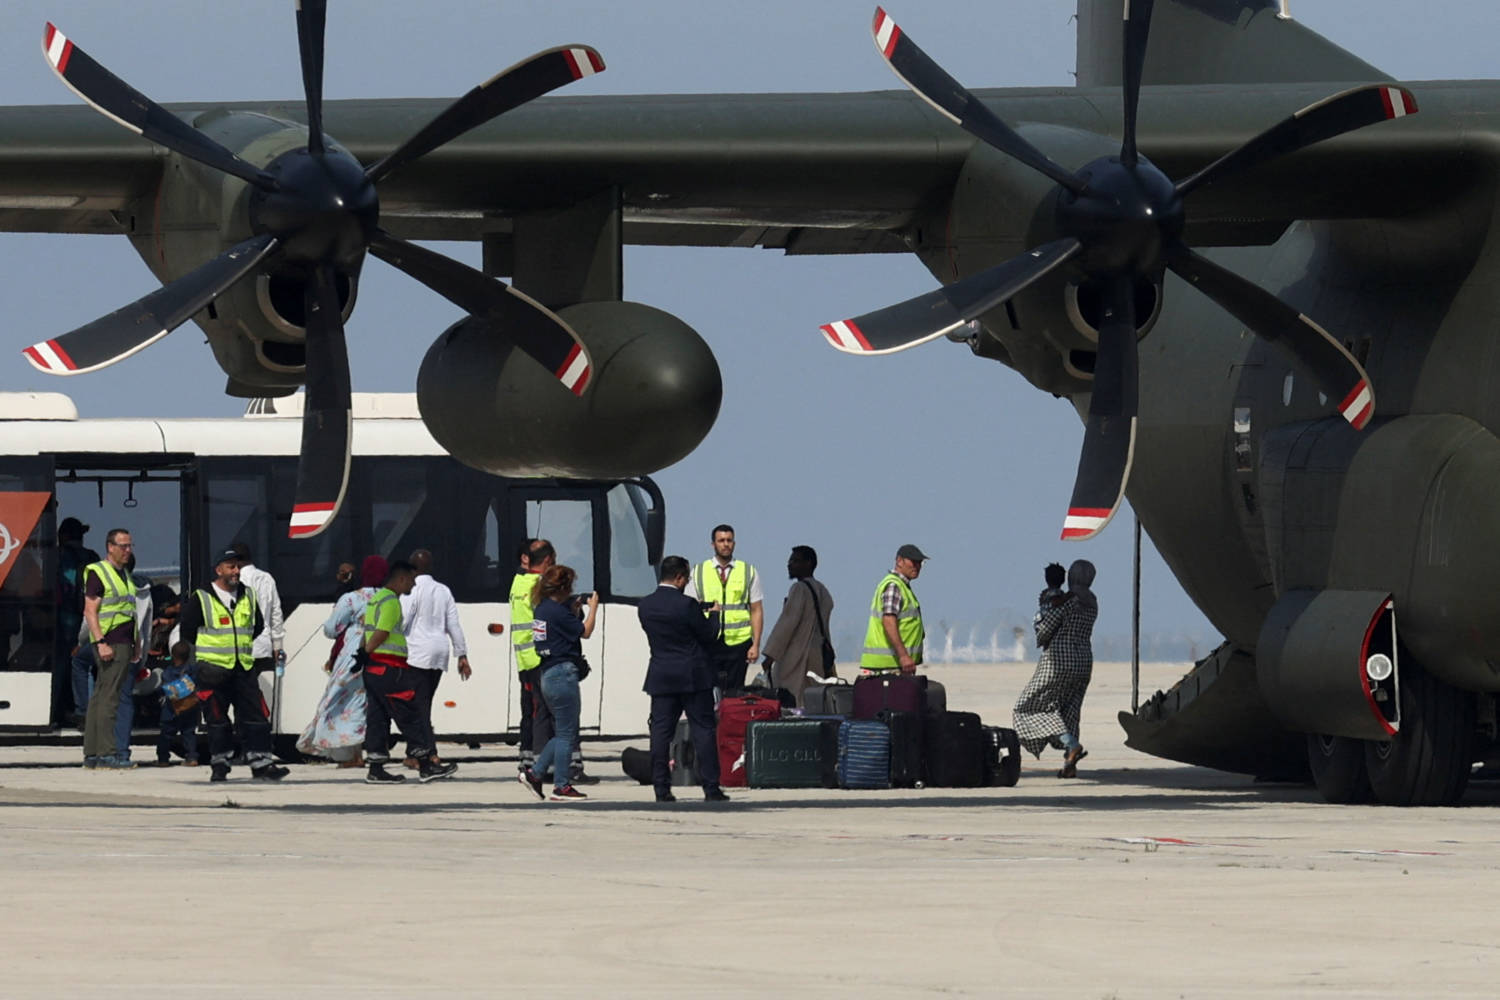 British Nationals Evacuated From Sudan Arrive At The Larnaca International Airport, In Larnaca